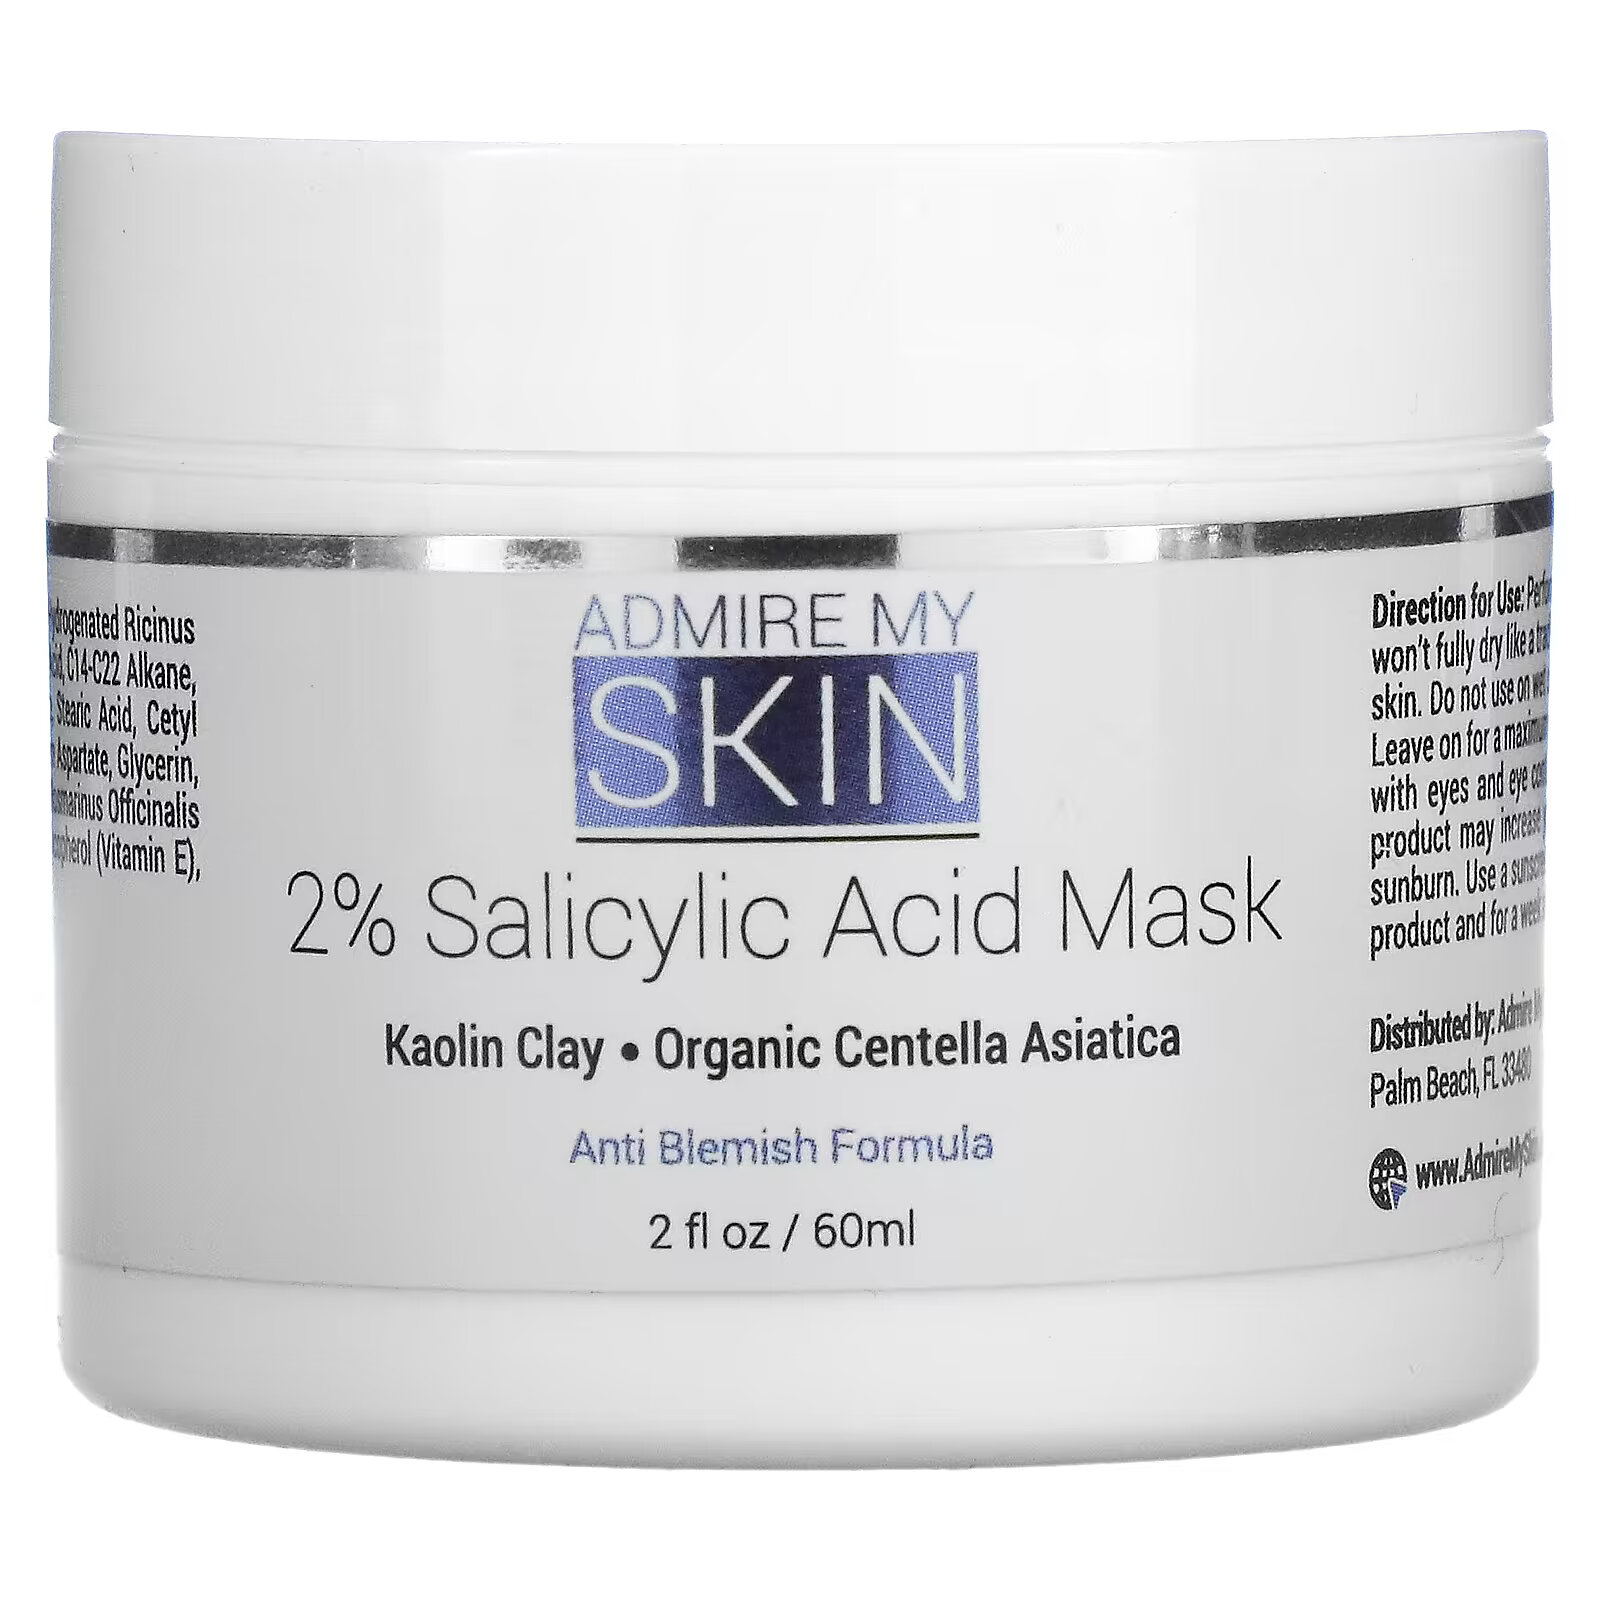 Admire My Skin, Маска с 2% салициловой кислотой, 60 мл (2 жидк. Унции) косметическая маска admire my skin с 2% салициловой кислотой 2 жидких унции 60 мл